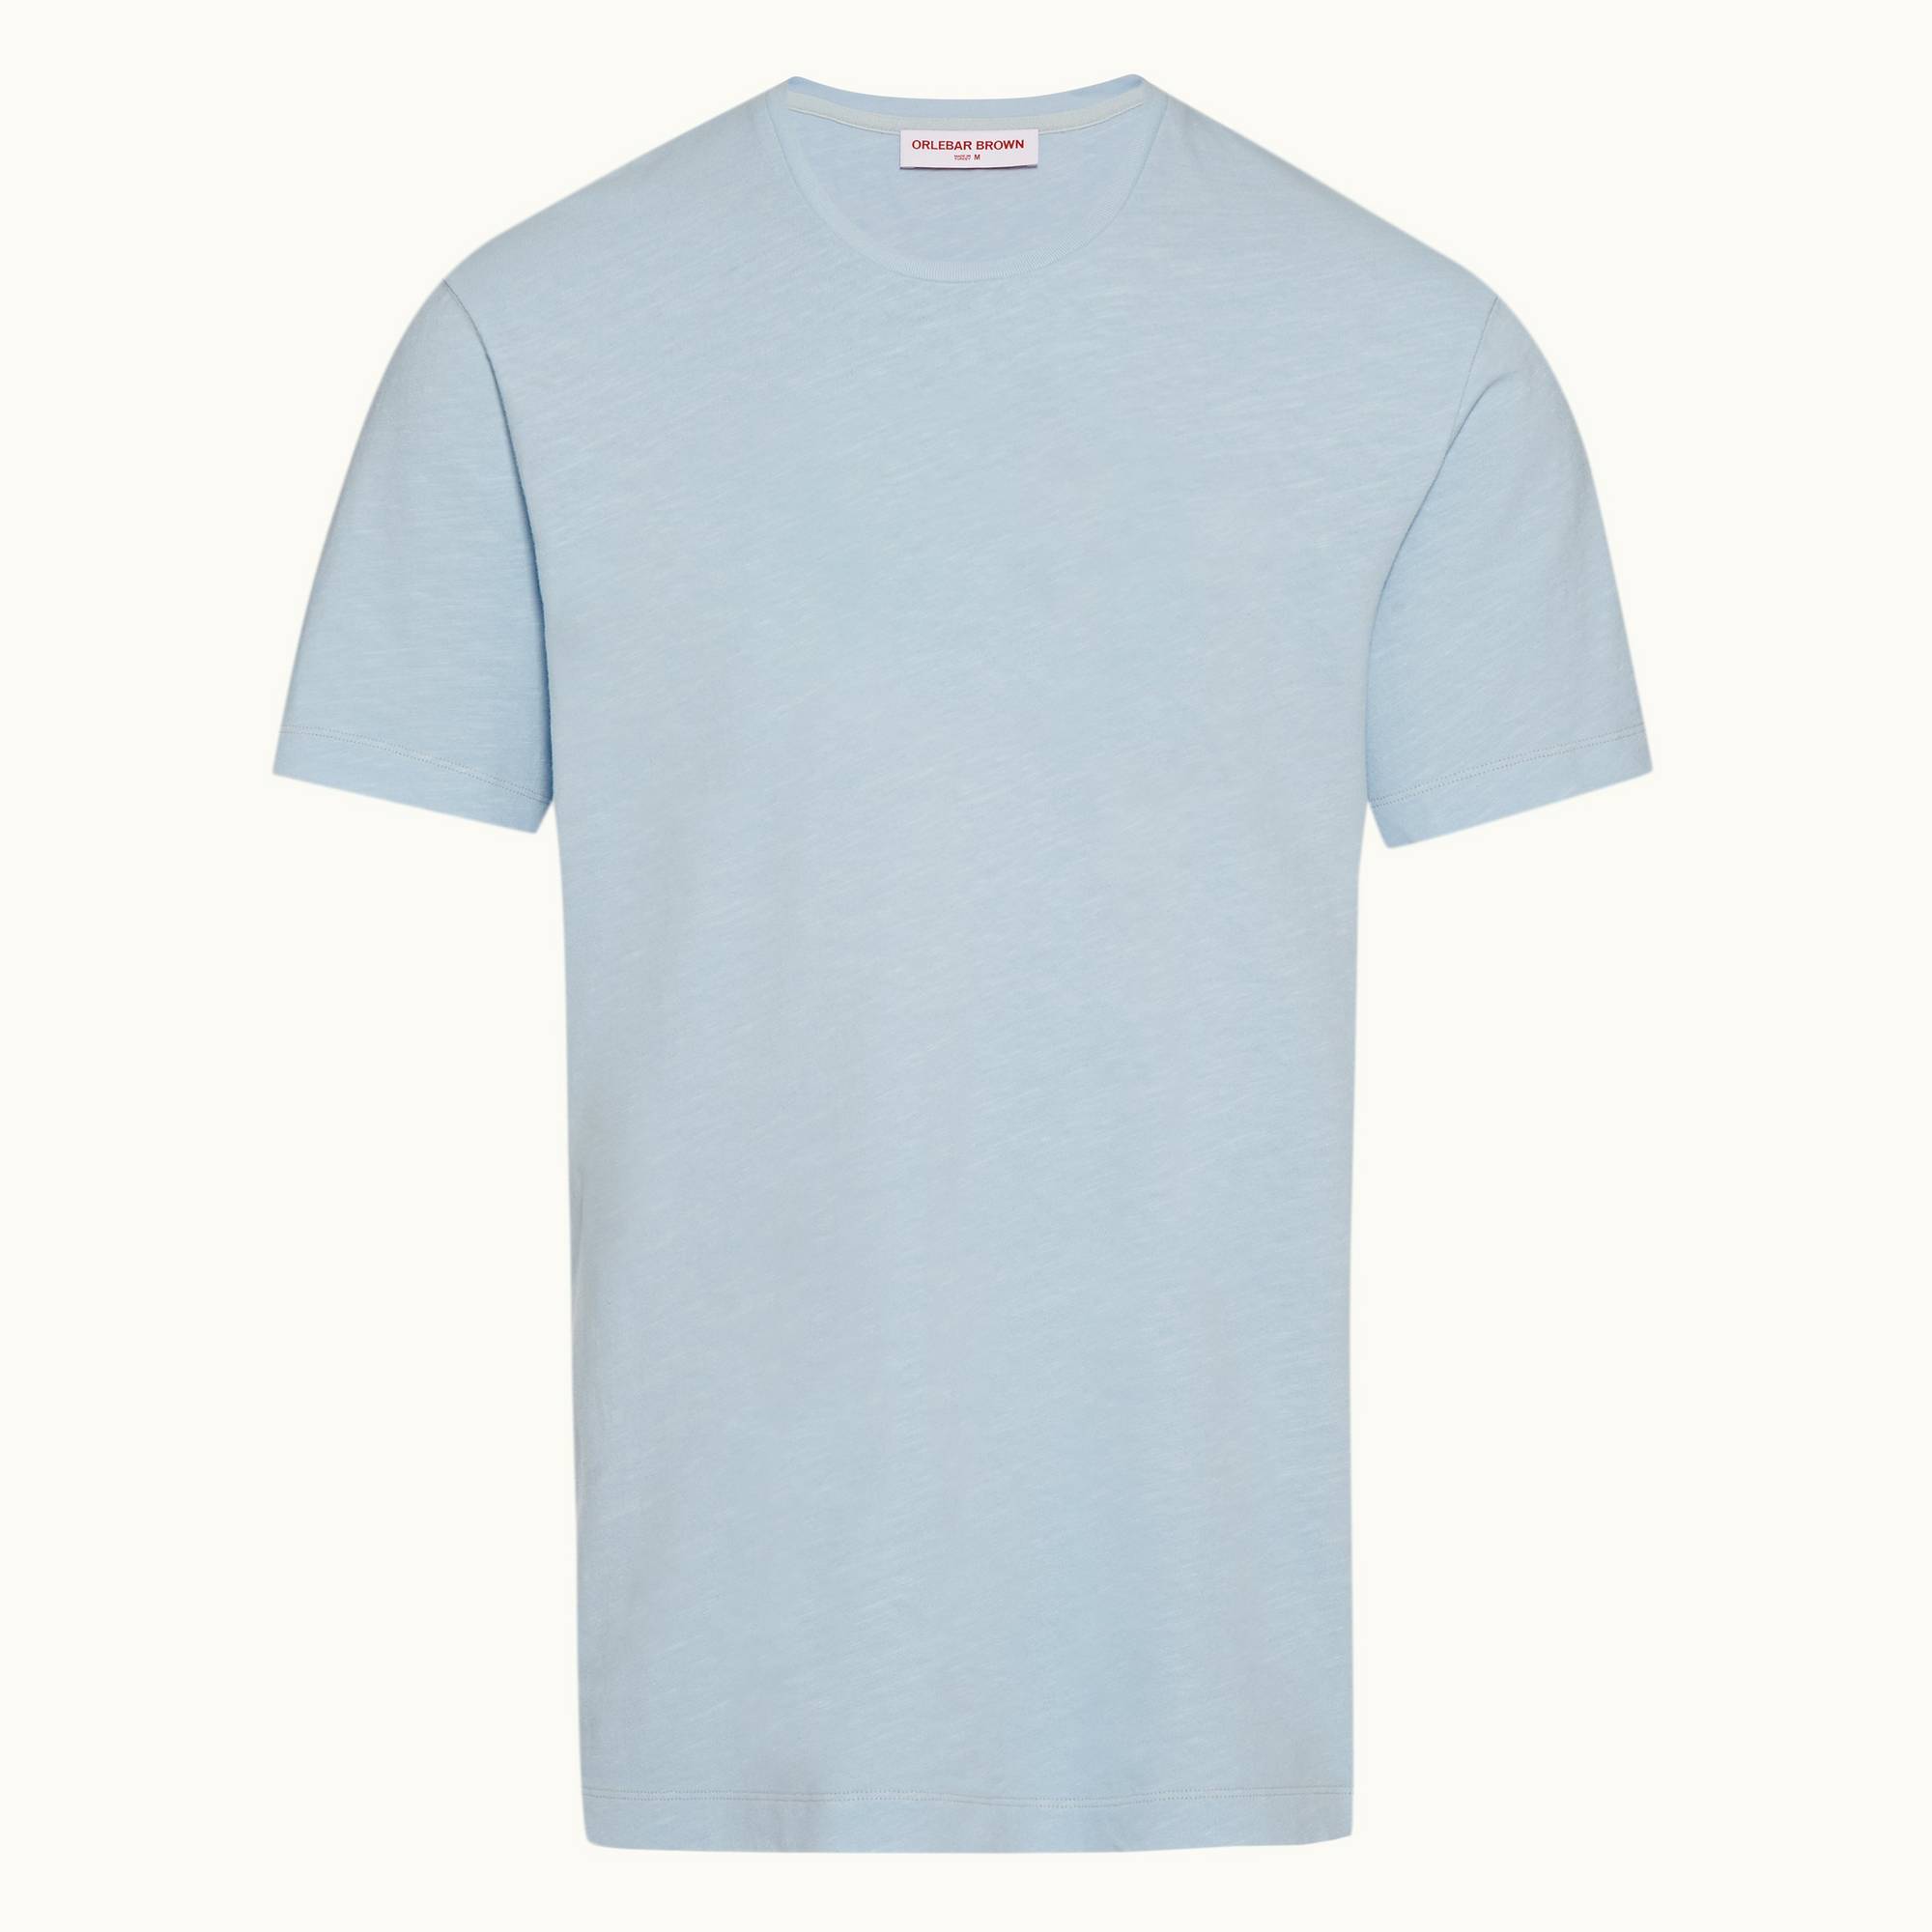 Nicolas - Mens Ice Pool Relaxed Fit Garment Dye T-shirt